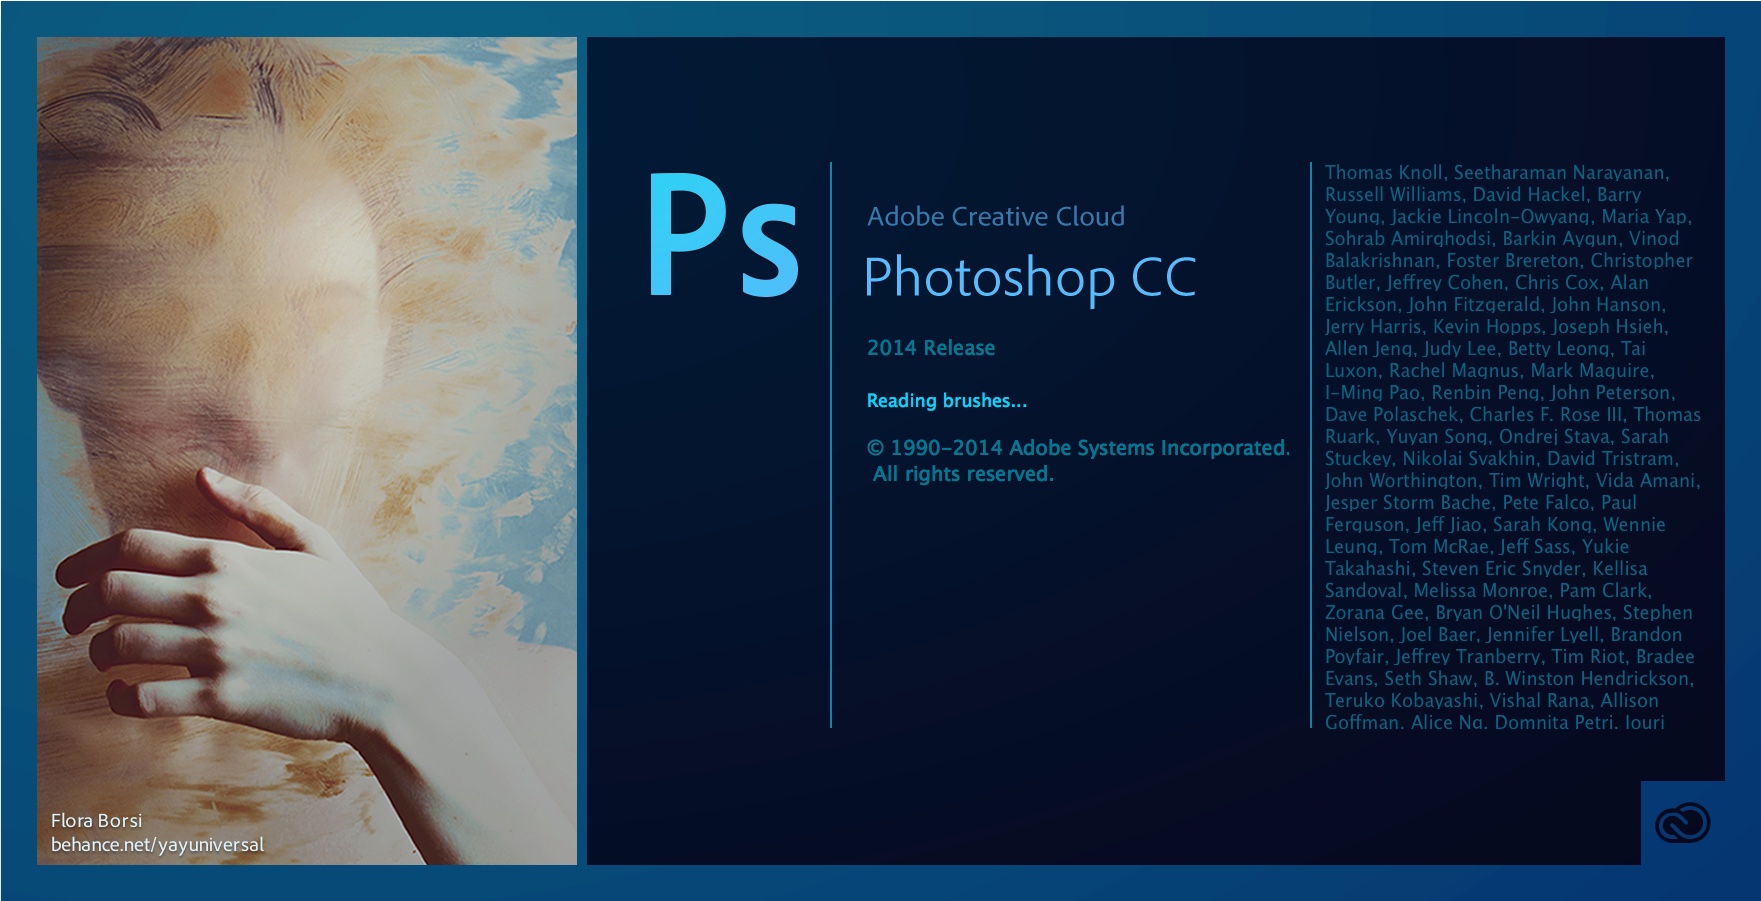 Adobe Photoshop CC 2014 Splash Image (2014)